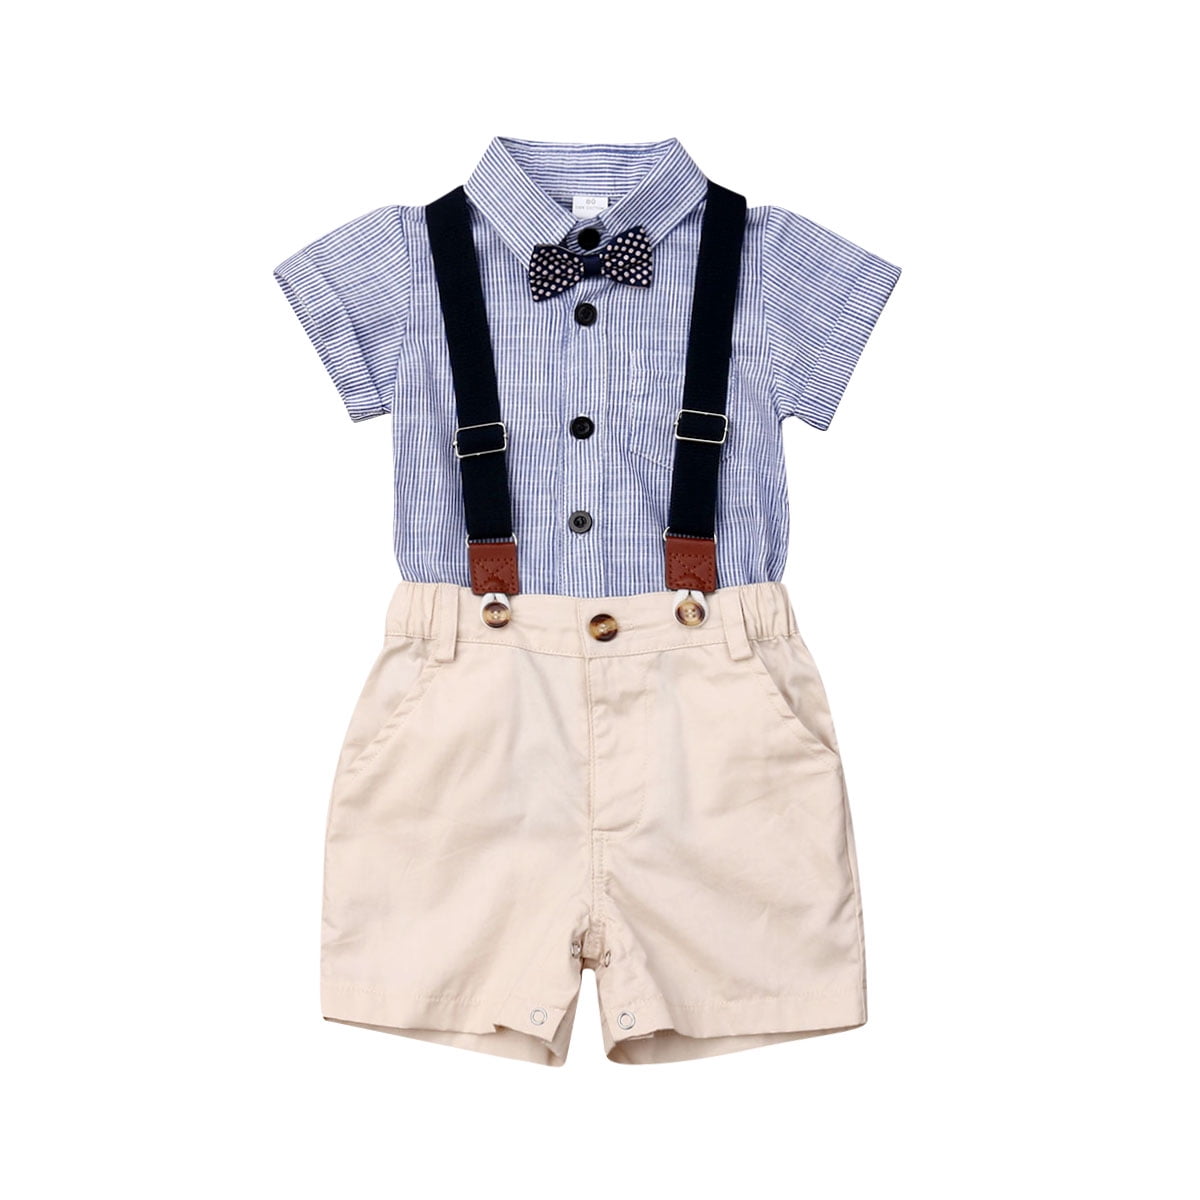 US Newborn Baby Boys Gentleman Outfits Formal Suit Bowtie Suspenders Shorts Set 